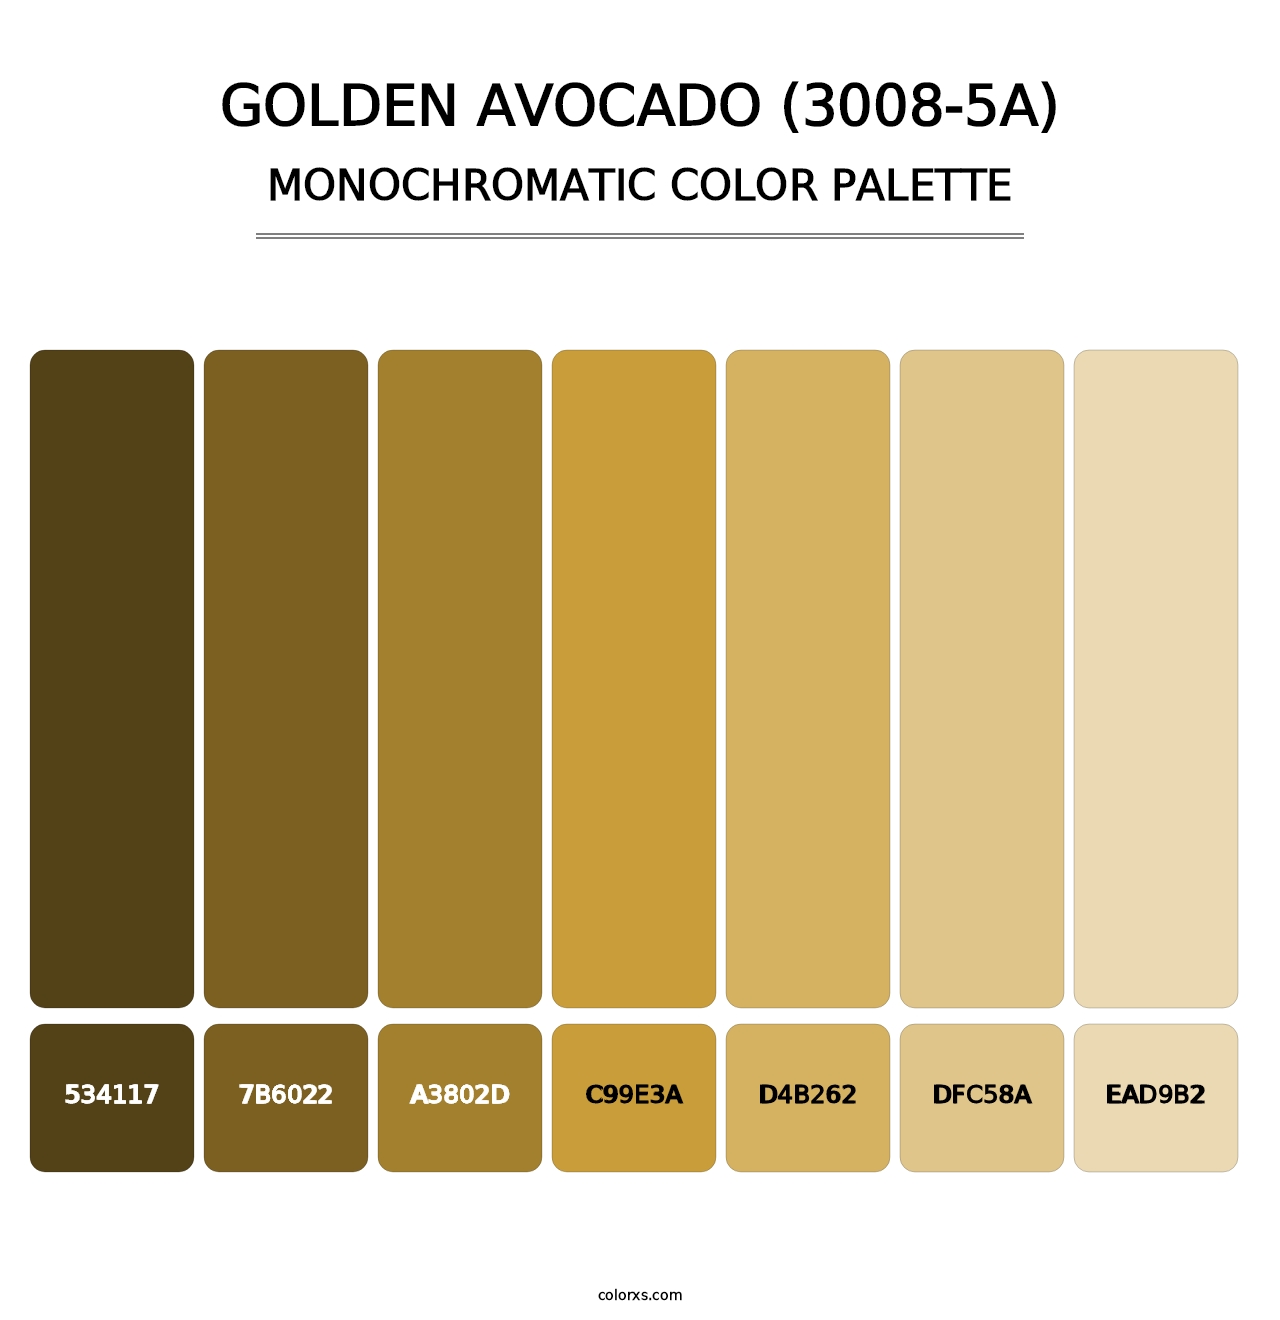 Golden Avocado (3008-5A) - Monochromatic Color Palette